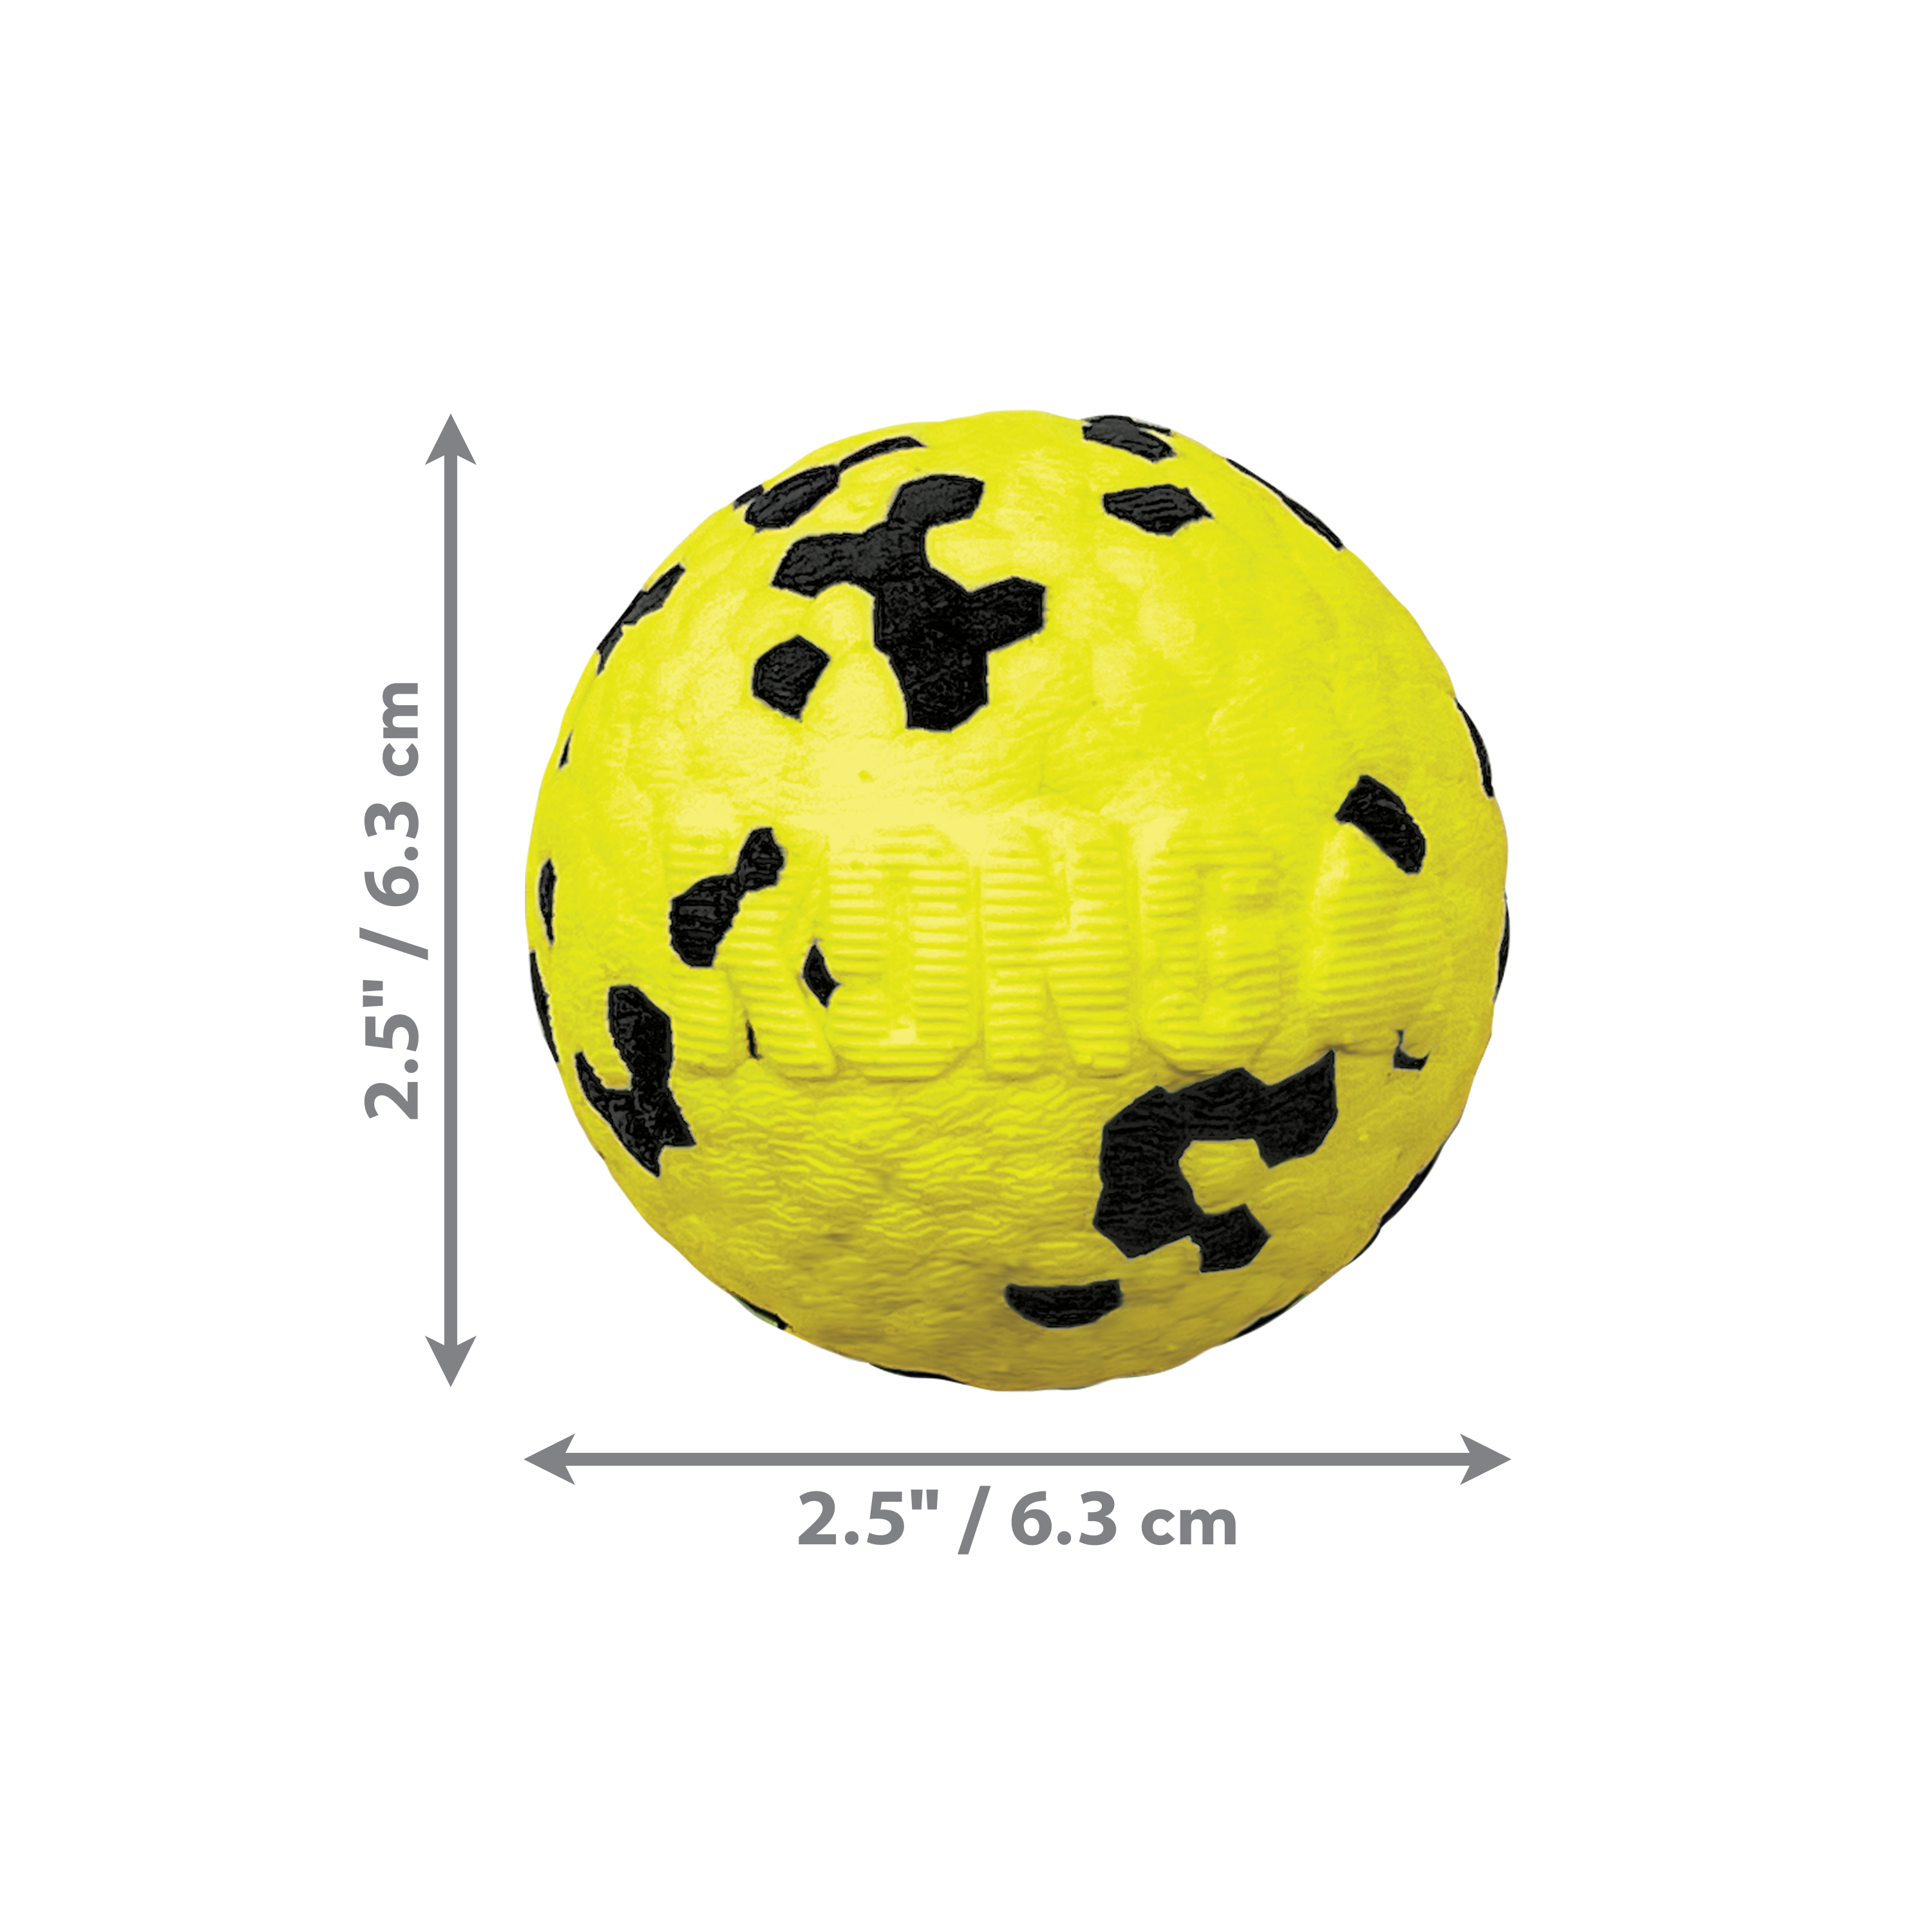 Imagen del producto Reflex Ball dimoffpack